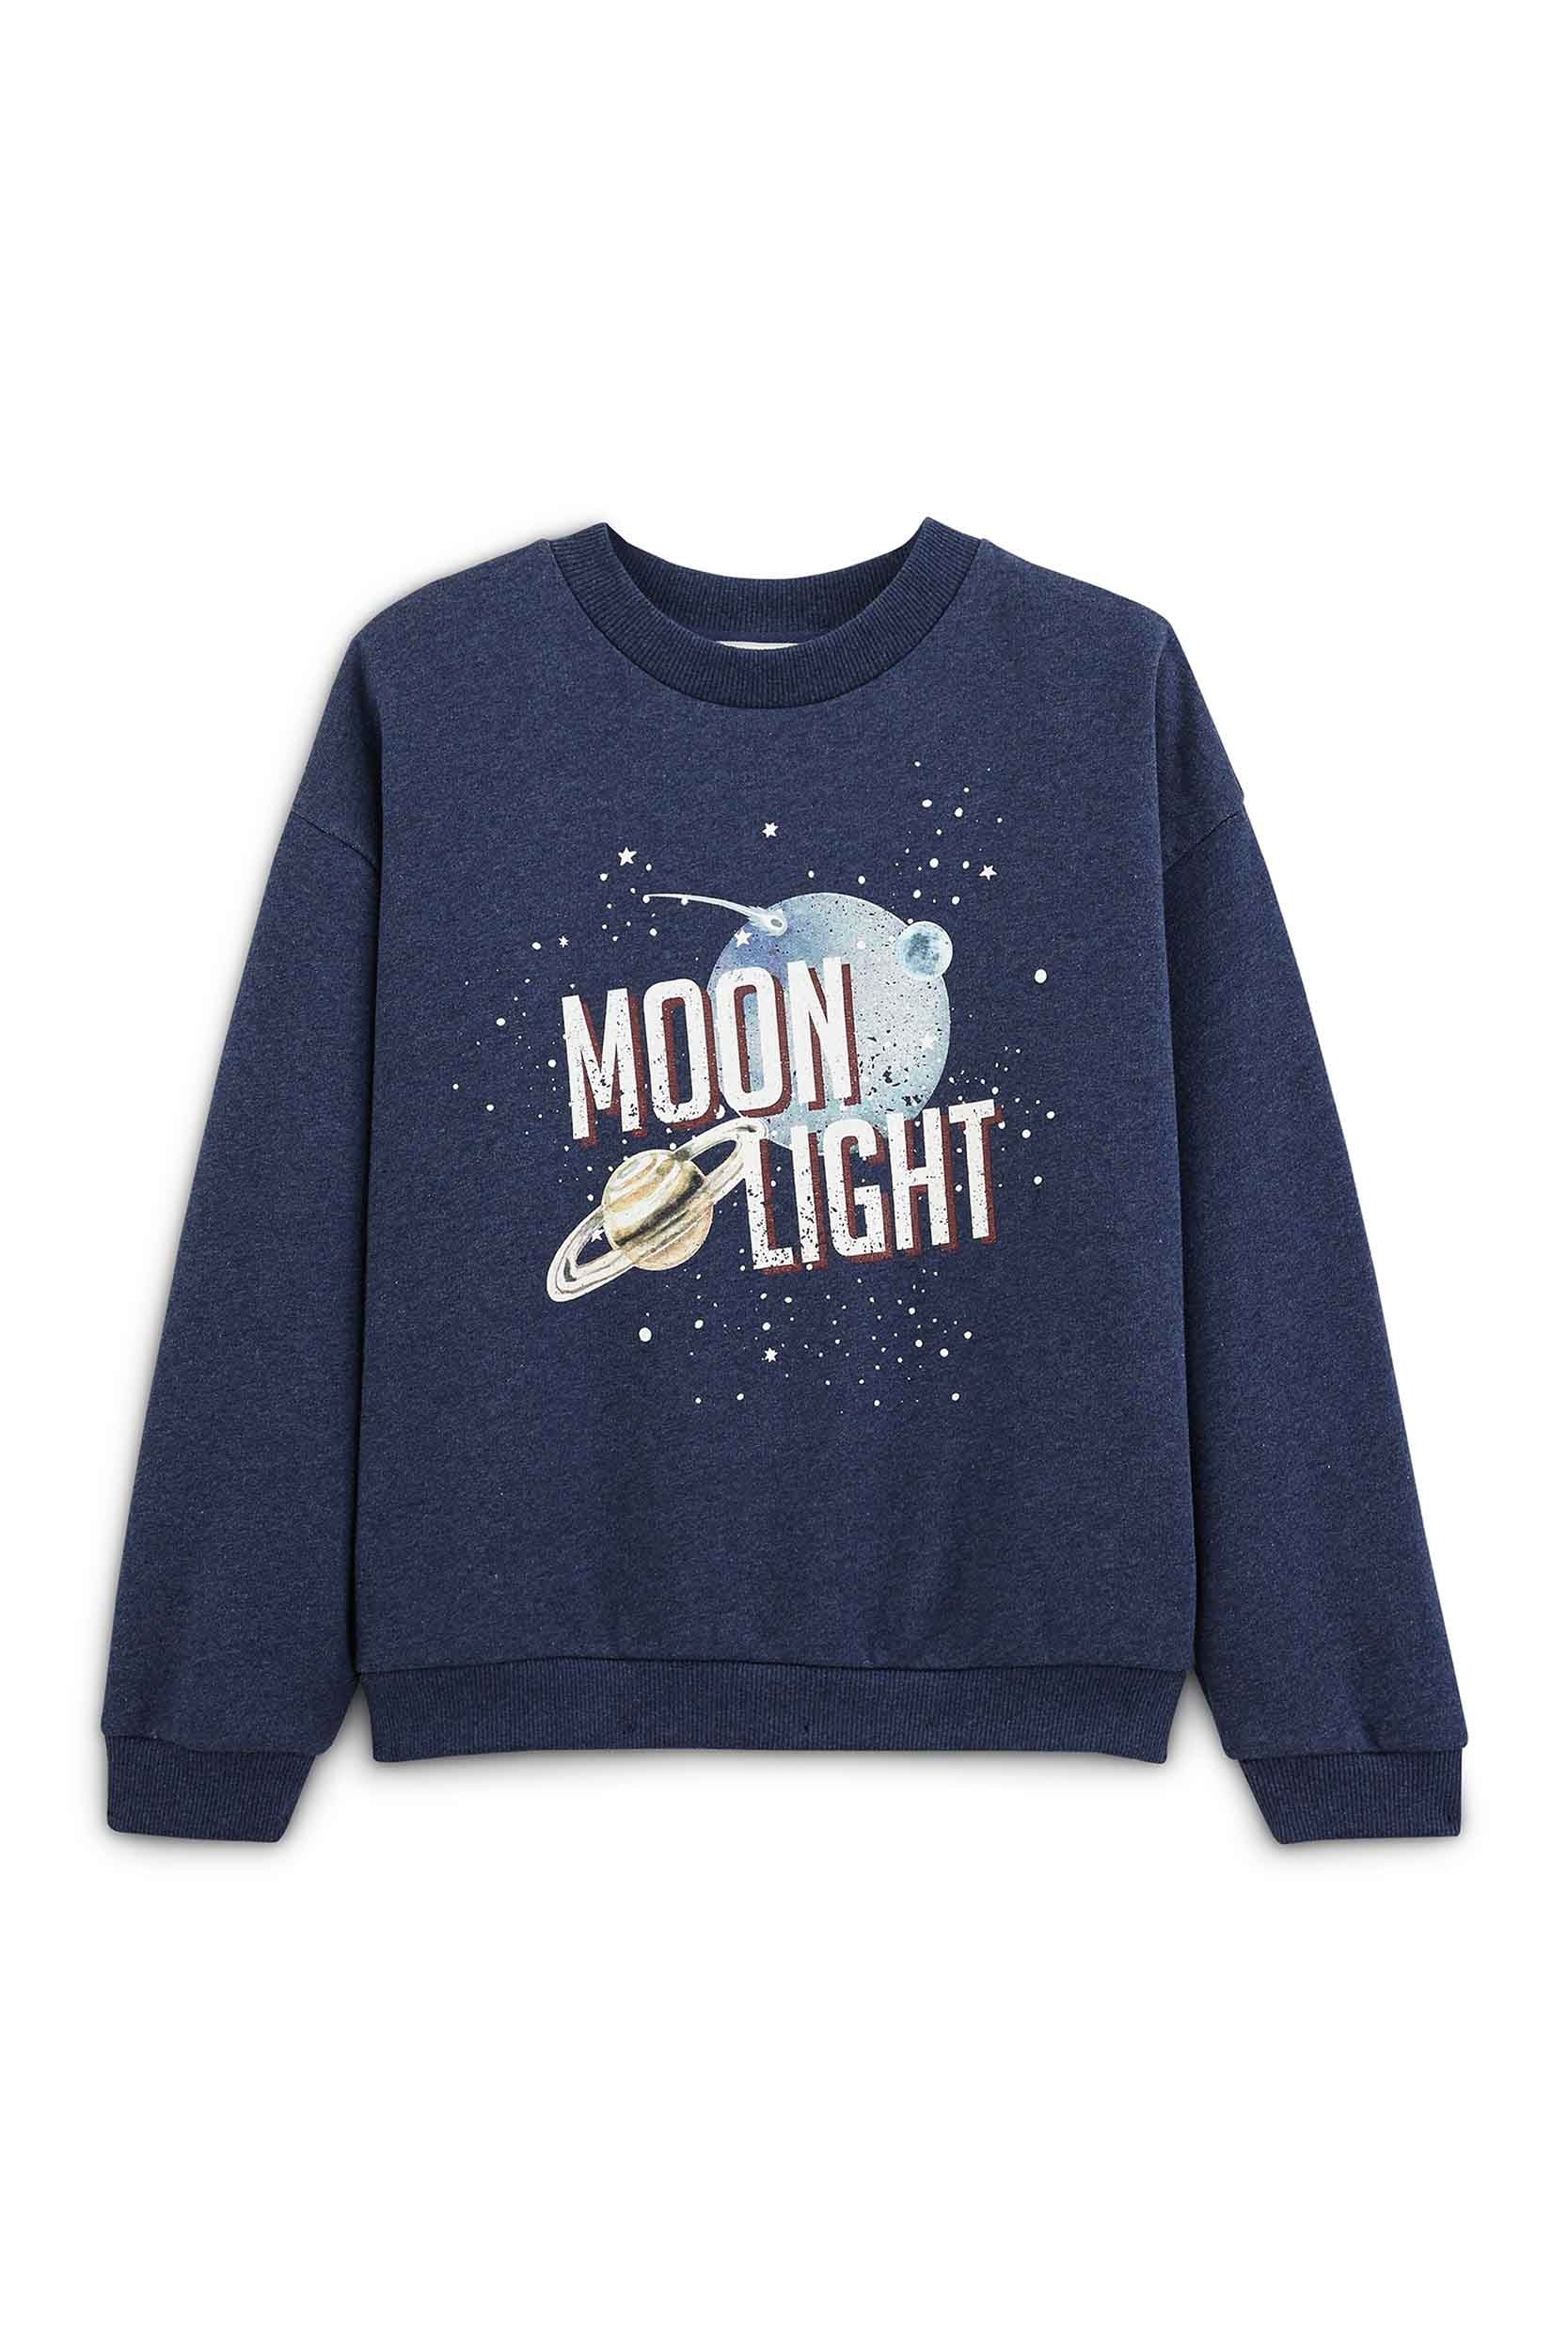 Cosmos navy sweatshirt 